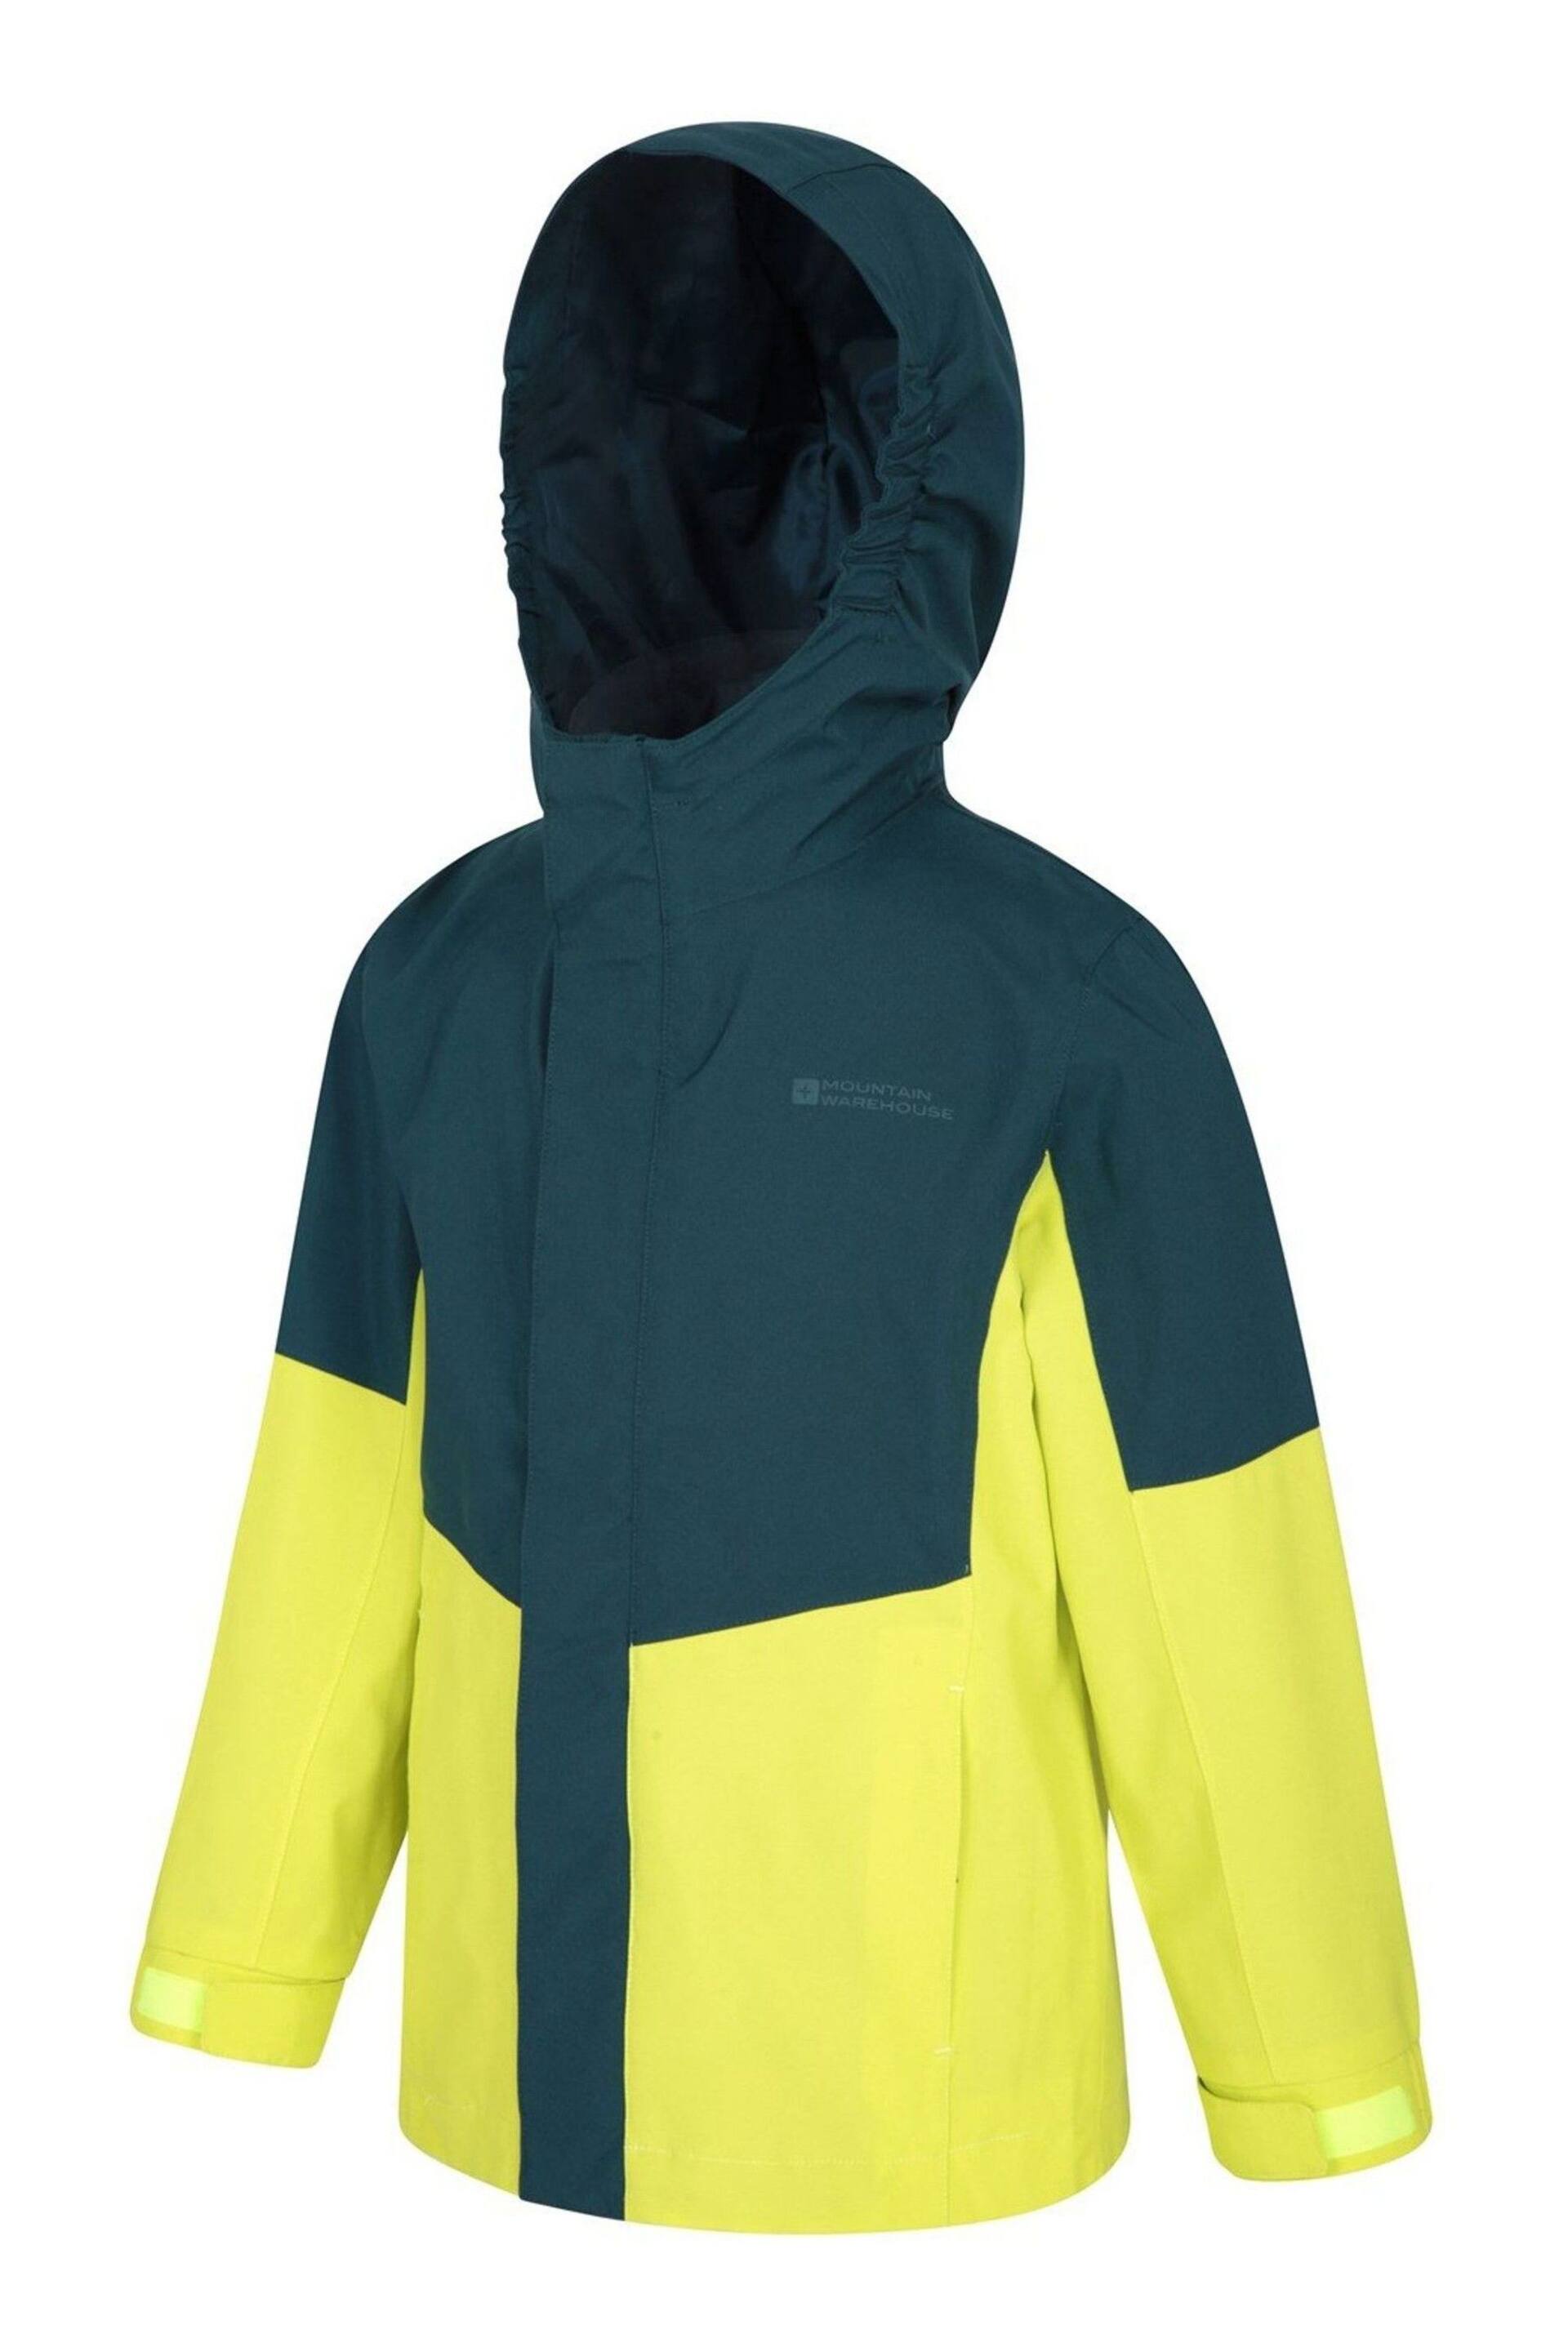 Mountain Warehouse Green Meteor Kids Waterproof, Breathable Outdoor Jacket - Image 3 of 4